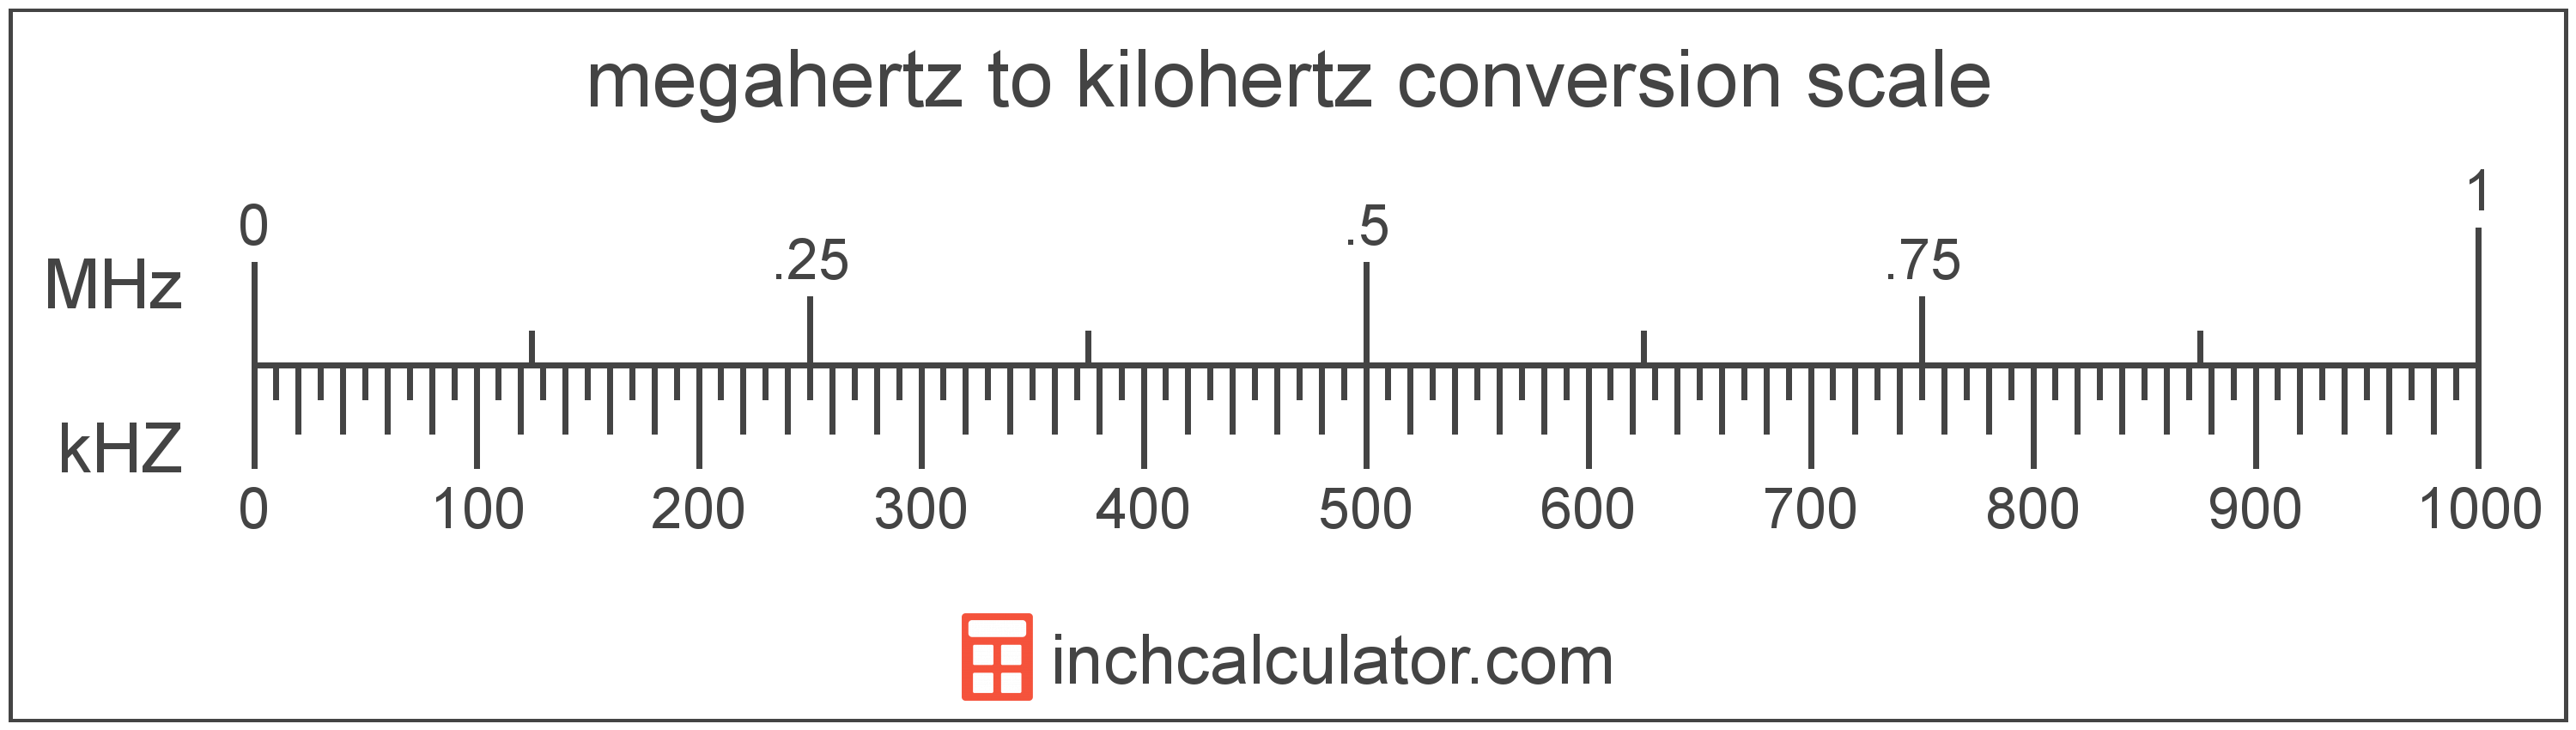 conversion scale showing megahertz and equivalent kilohertz frequency values